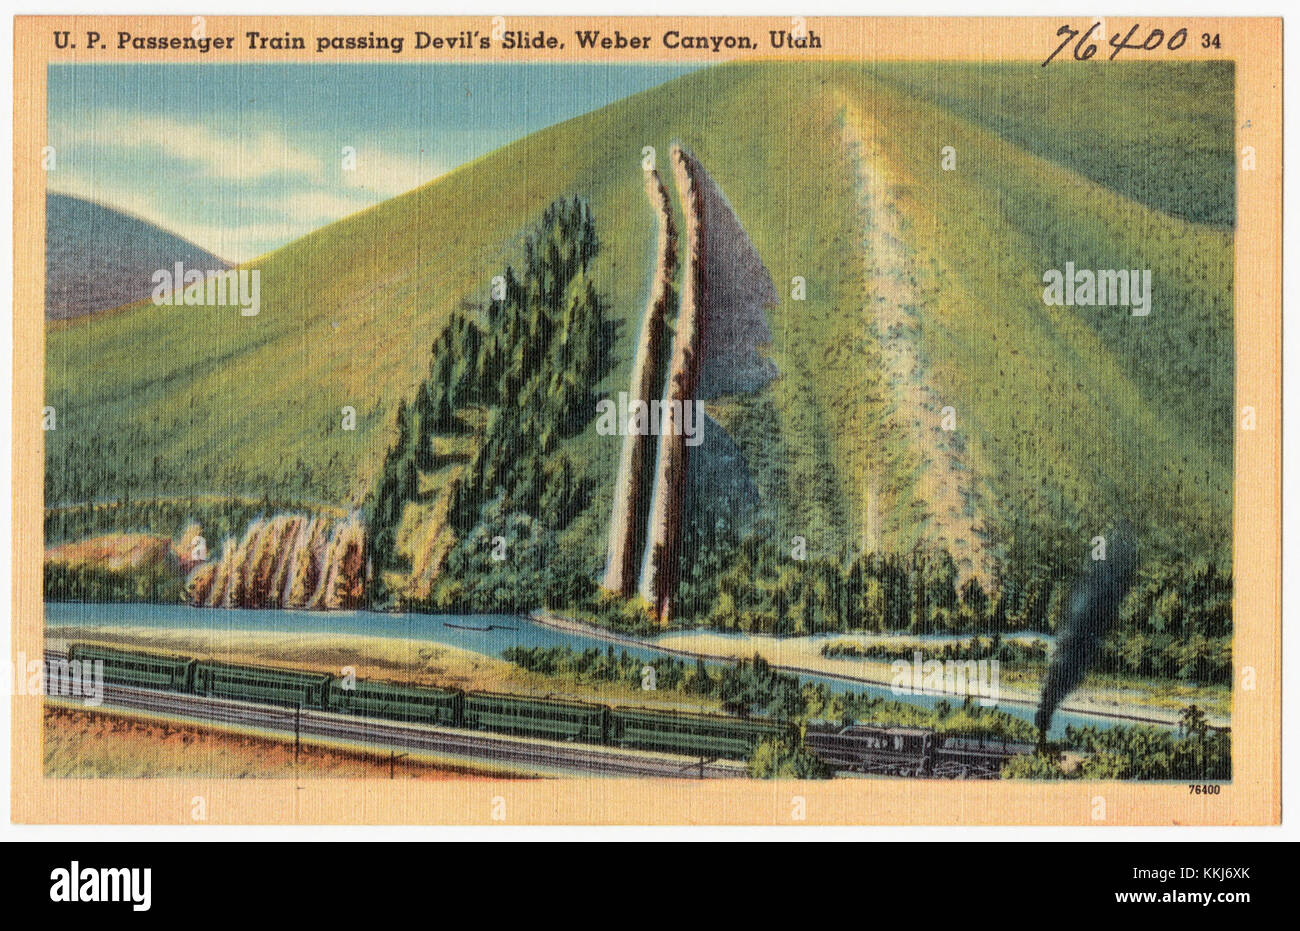 U. P. Passenger Train passing Devil's Slide, Weber Canyon, Utah (76400) Stock Photo